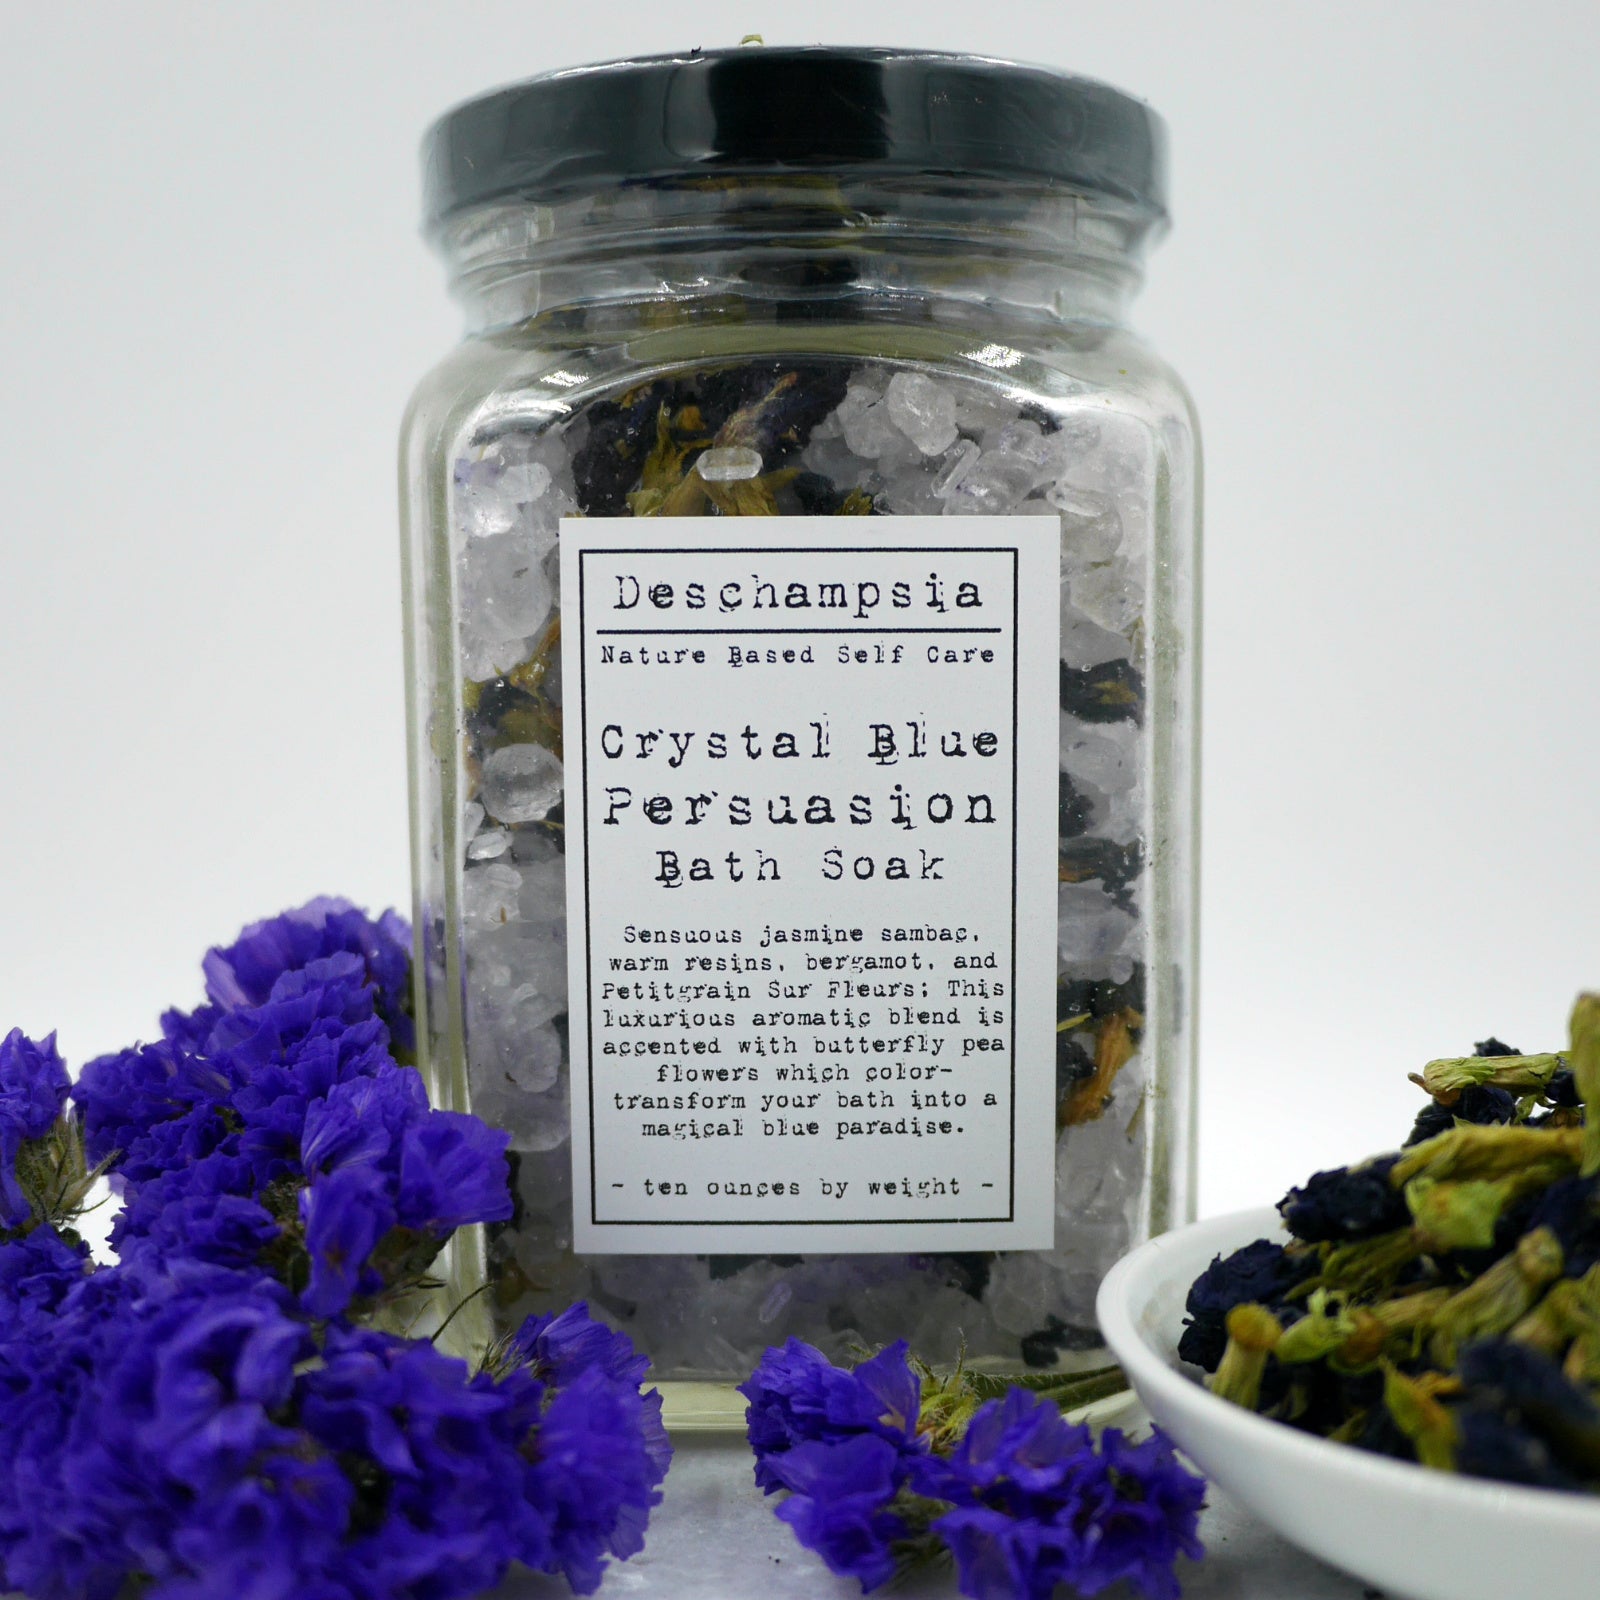 Crystal Blue Persuasion Bath Soak - Deschampsia - Nature Based Self Care